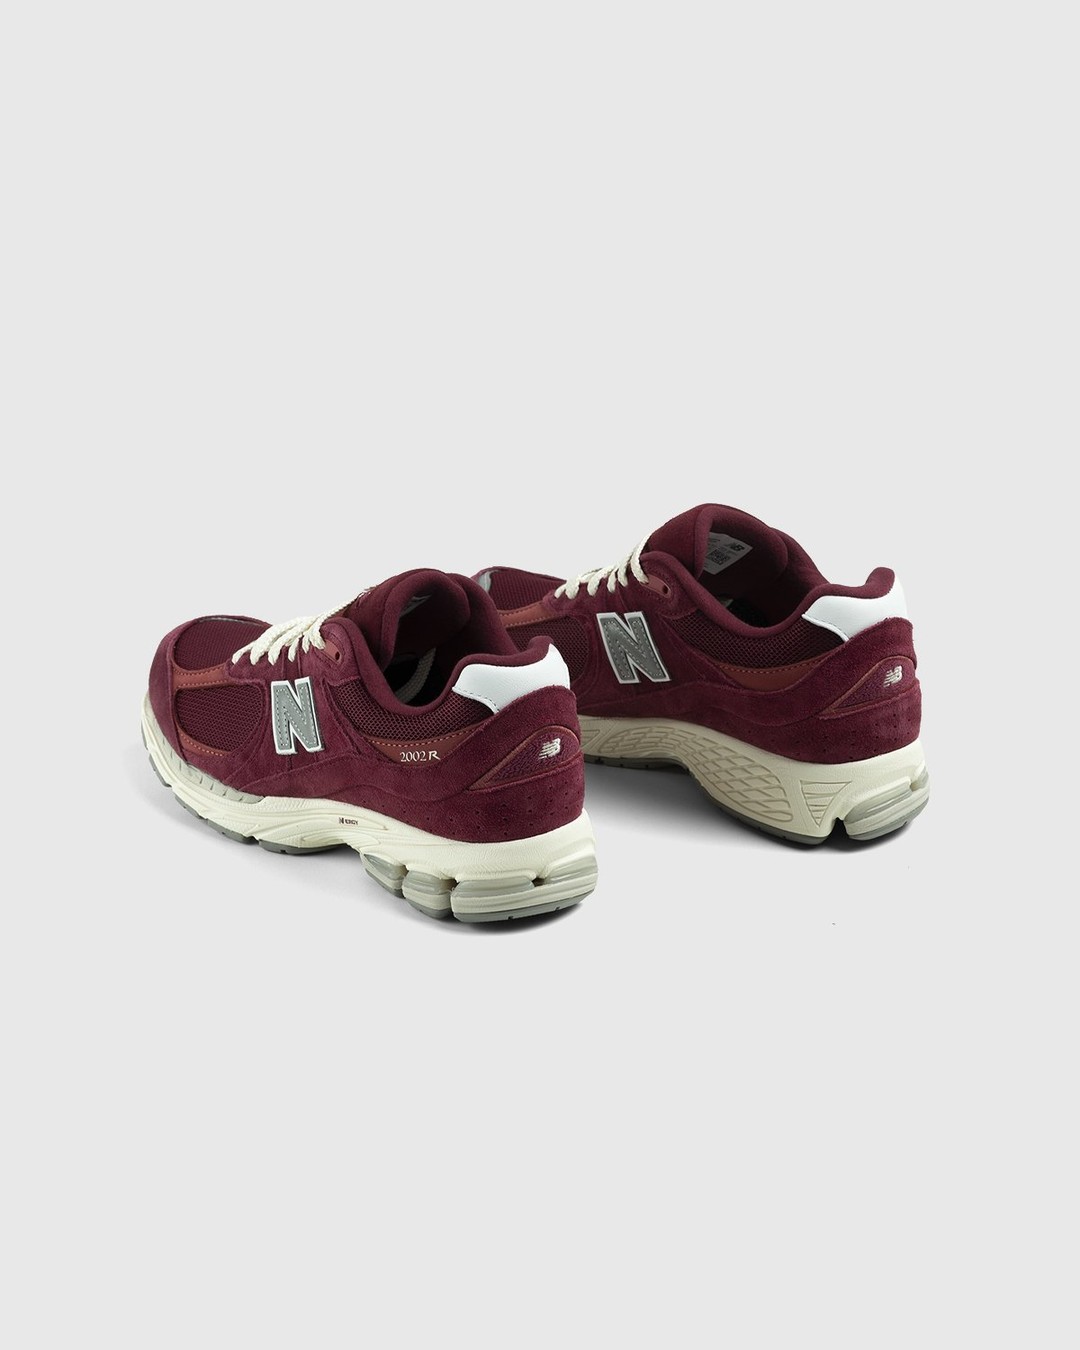 New Balance – M2002RHA Garnet - Low Top Sneakers - Red - Image 4